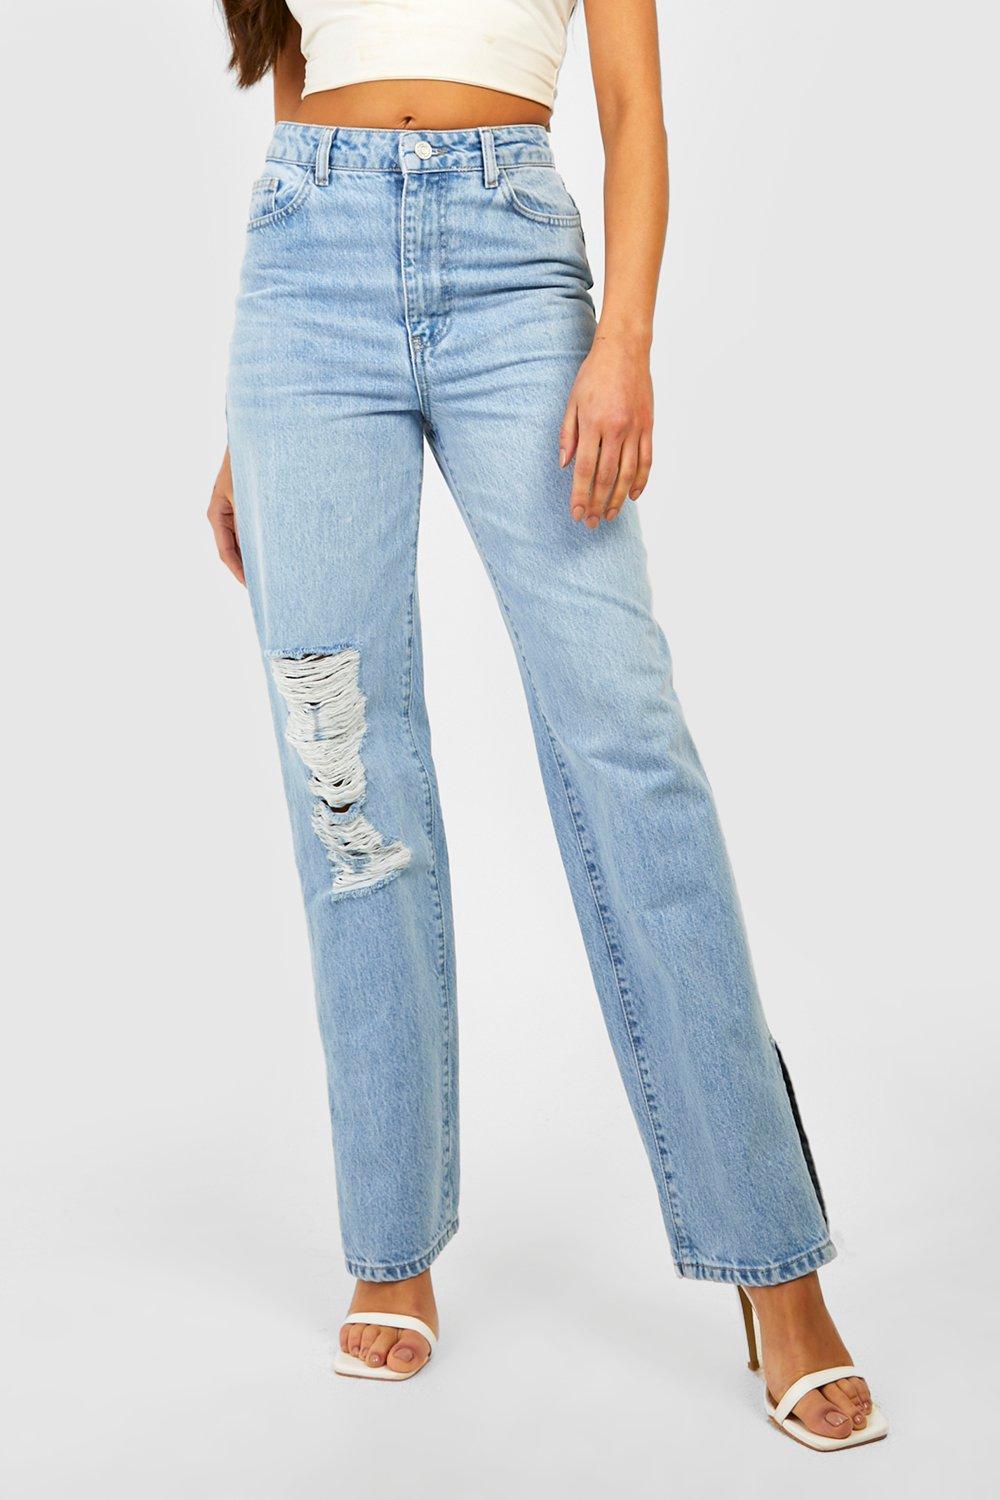 Straight Leg Split Hem Women's Jeans Blue - Rebellious Fashion